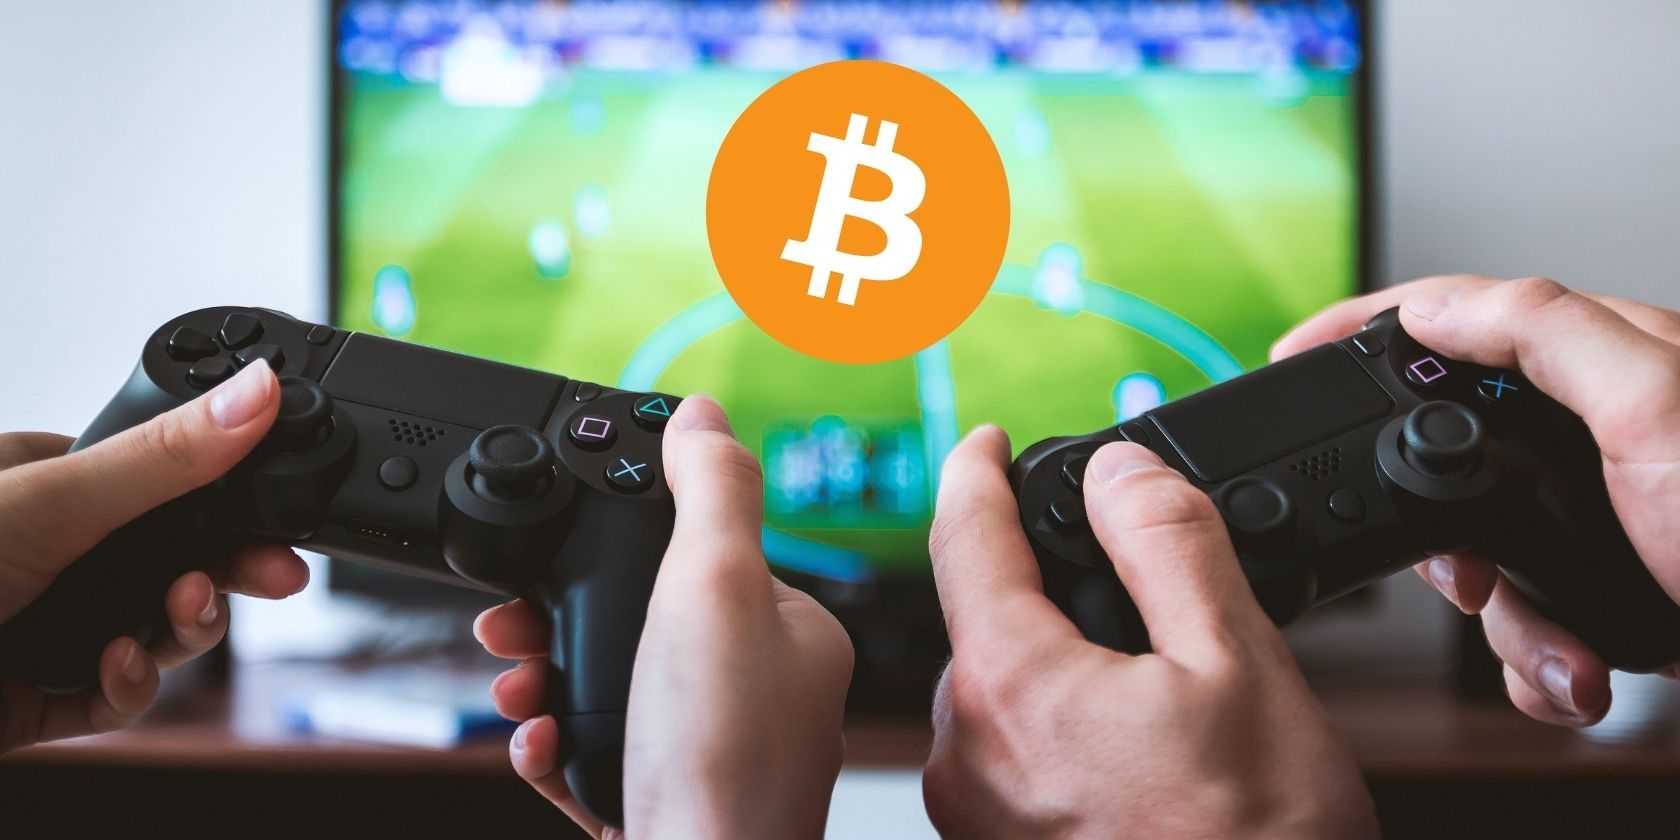 Gagner du bitcoin en jouant: Bitcoin gaming